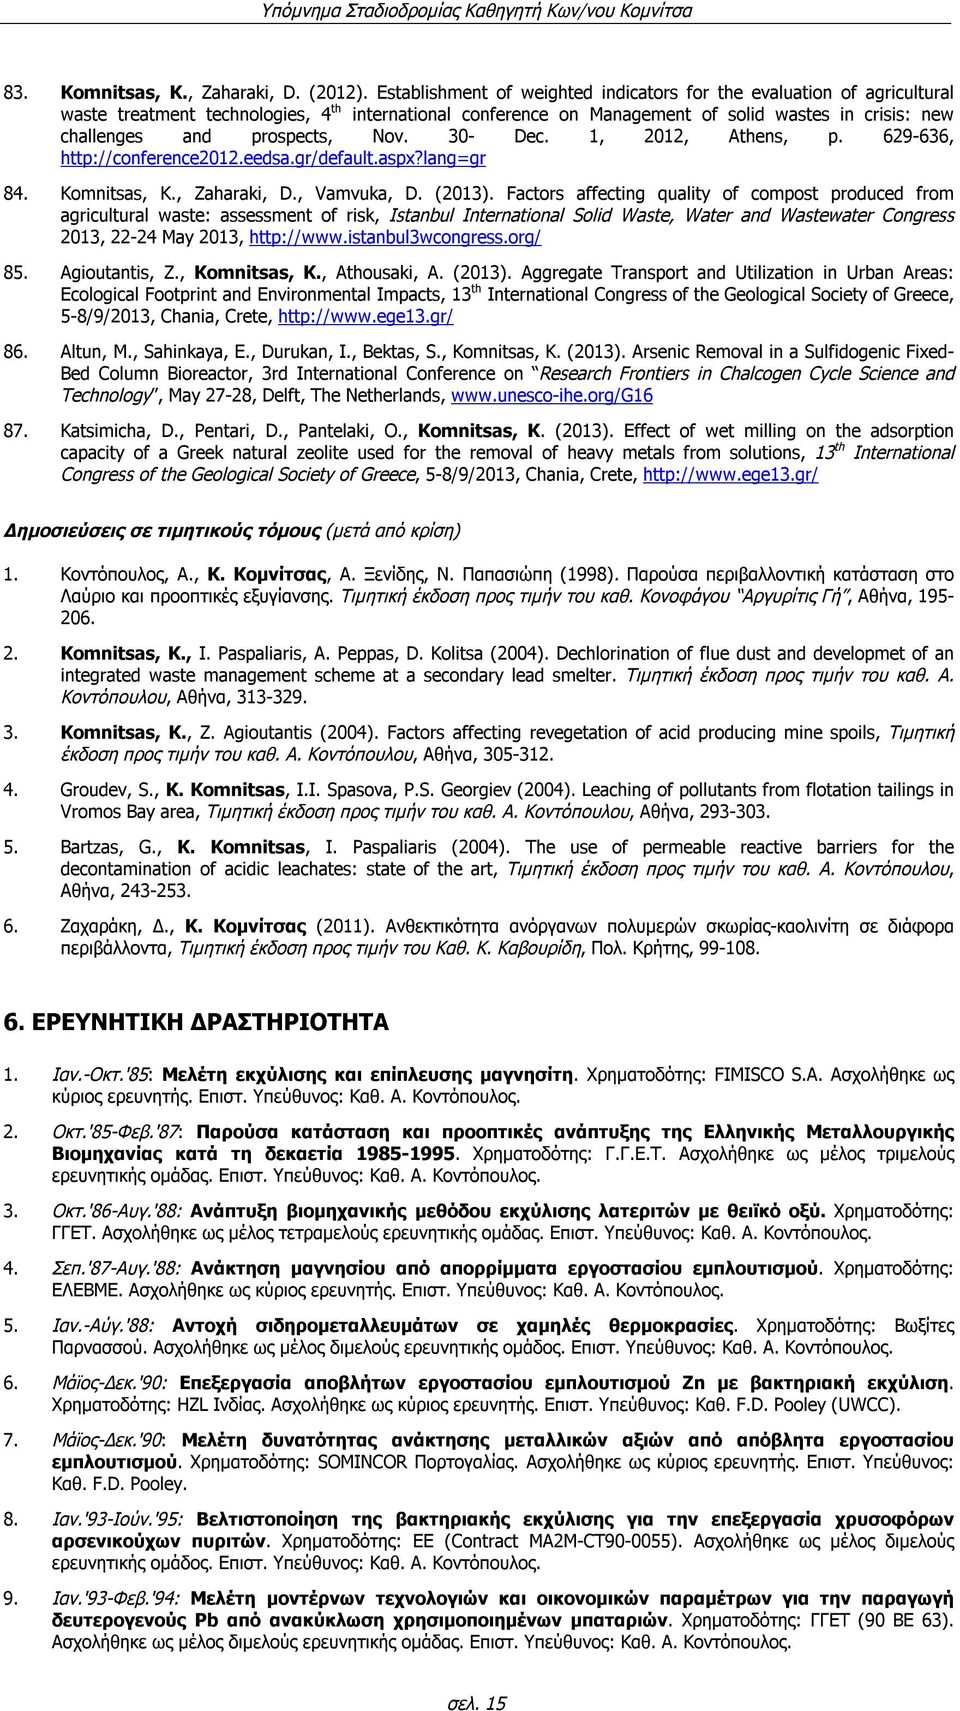 prospects, Nov. 30- Dec. 1, 2012, Athens, p. 629-636, http://conference2012.eedsa.gr/default.aspx?lang=gr 84. Komnitsas, K., Zaharaki, D., Vamvuka, D. (2013).